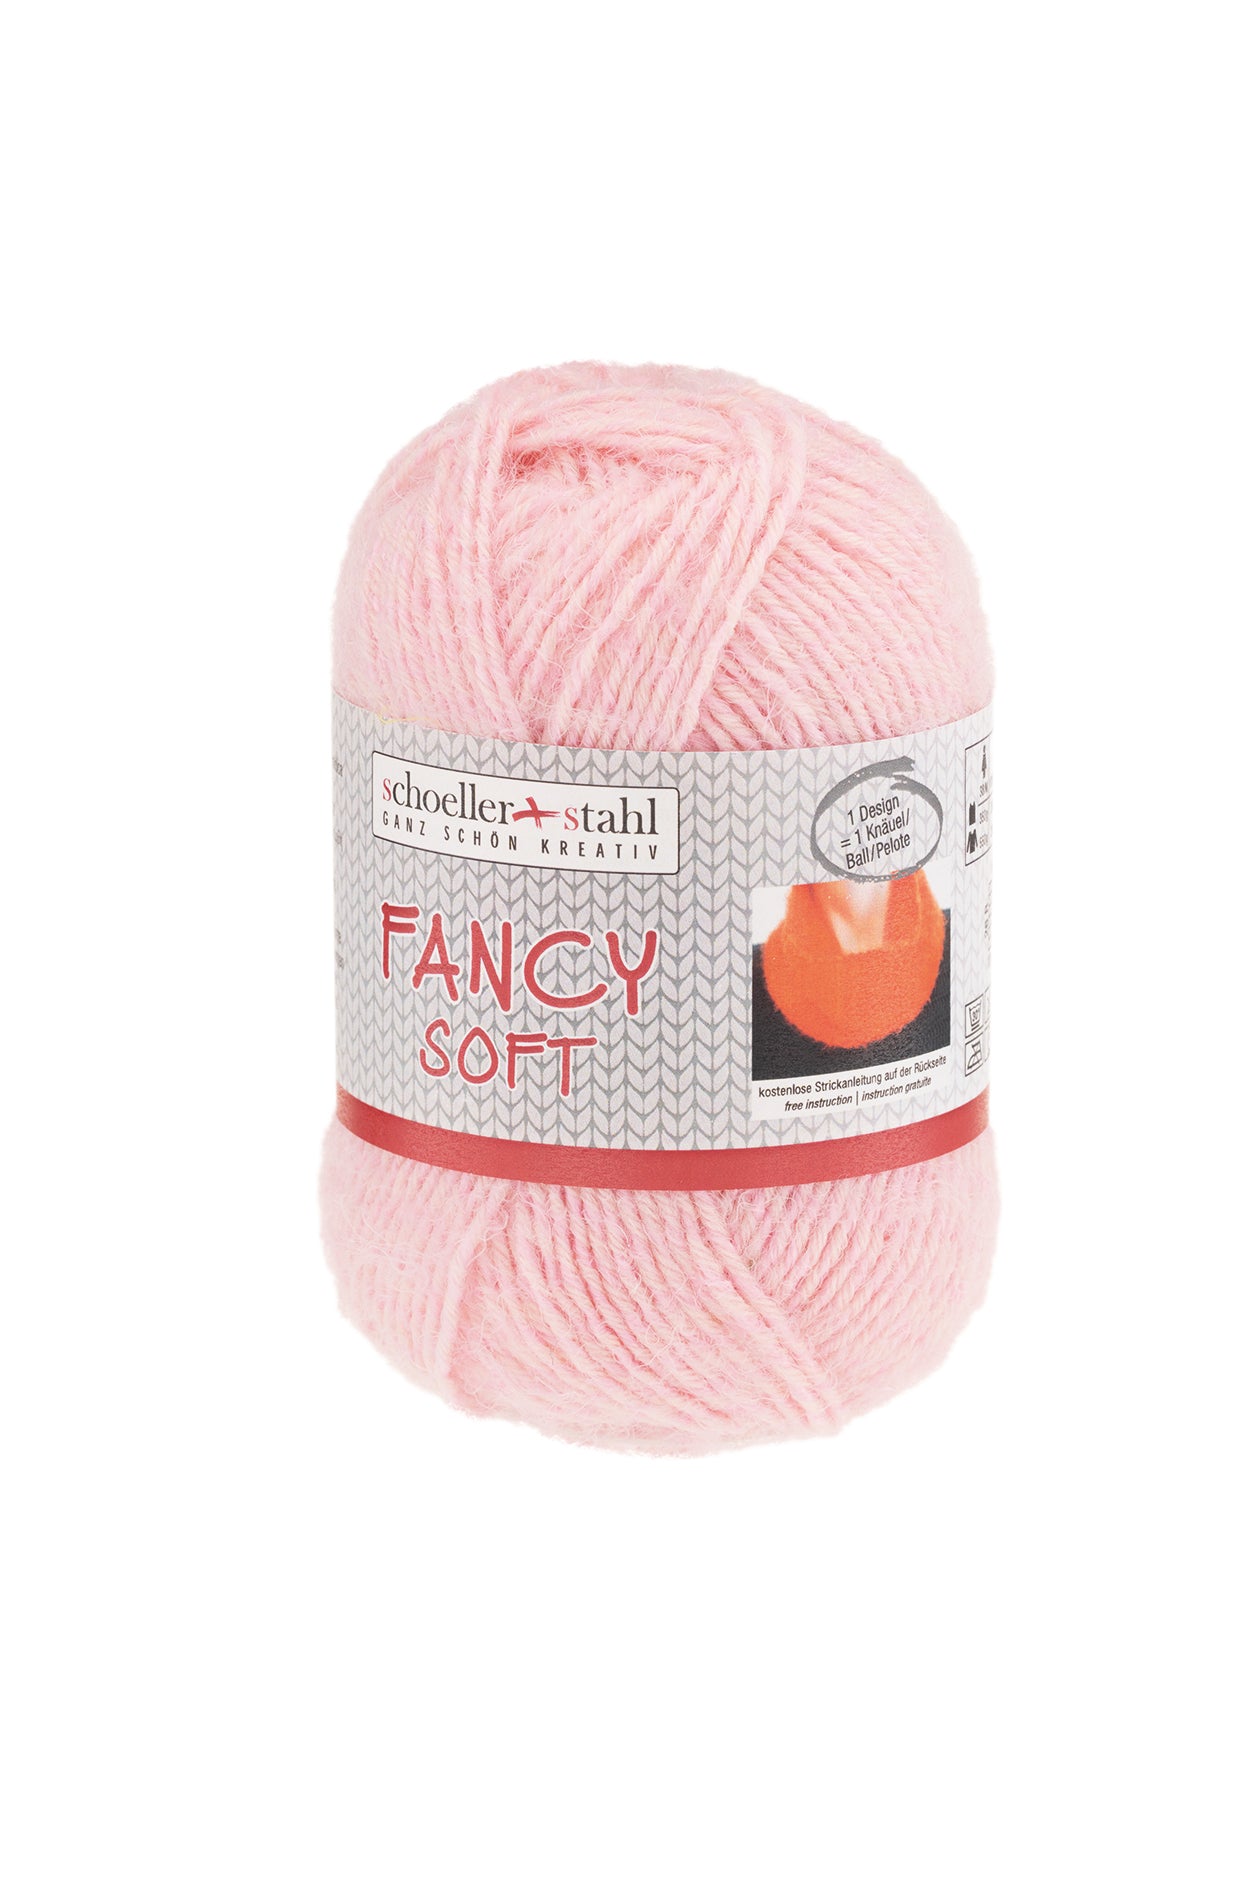 Fancy Soft  50g, 90233, Farbe 2, rosa